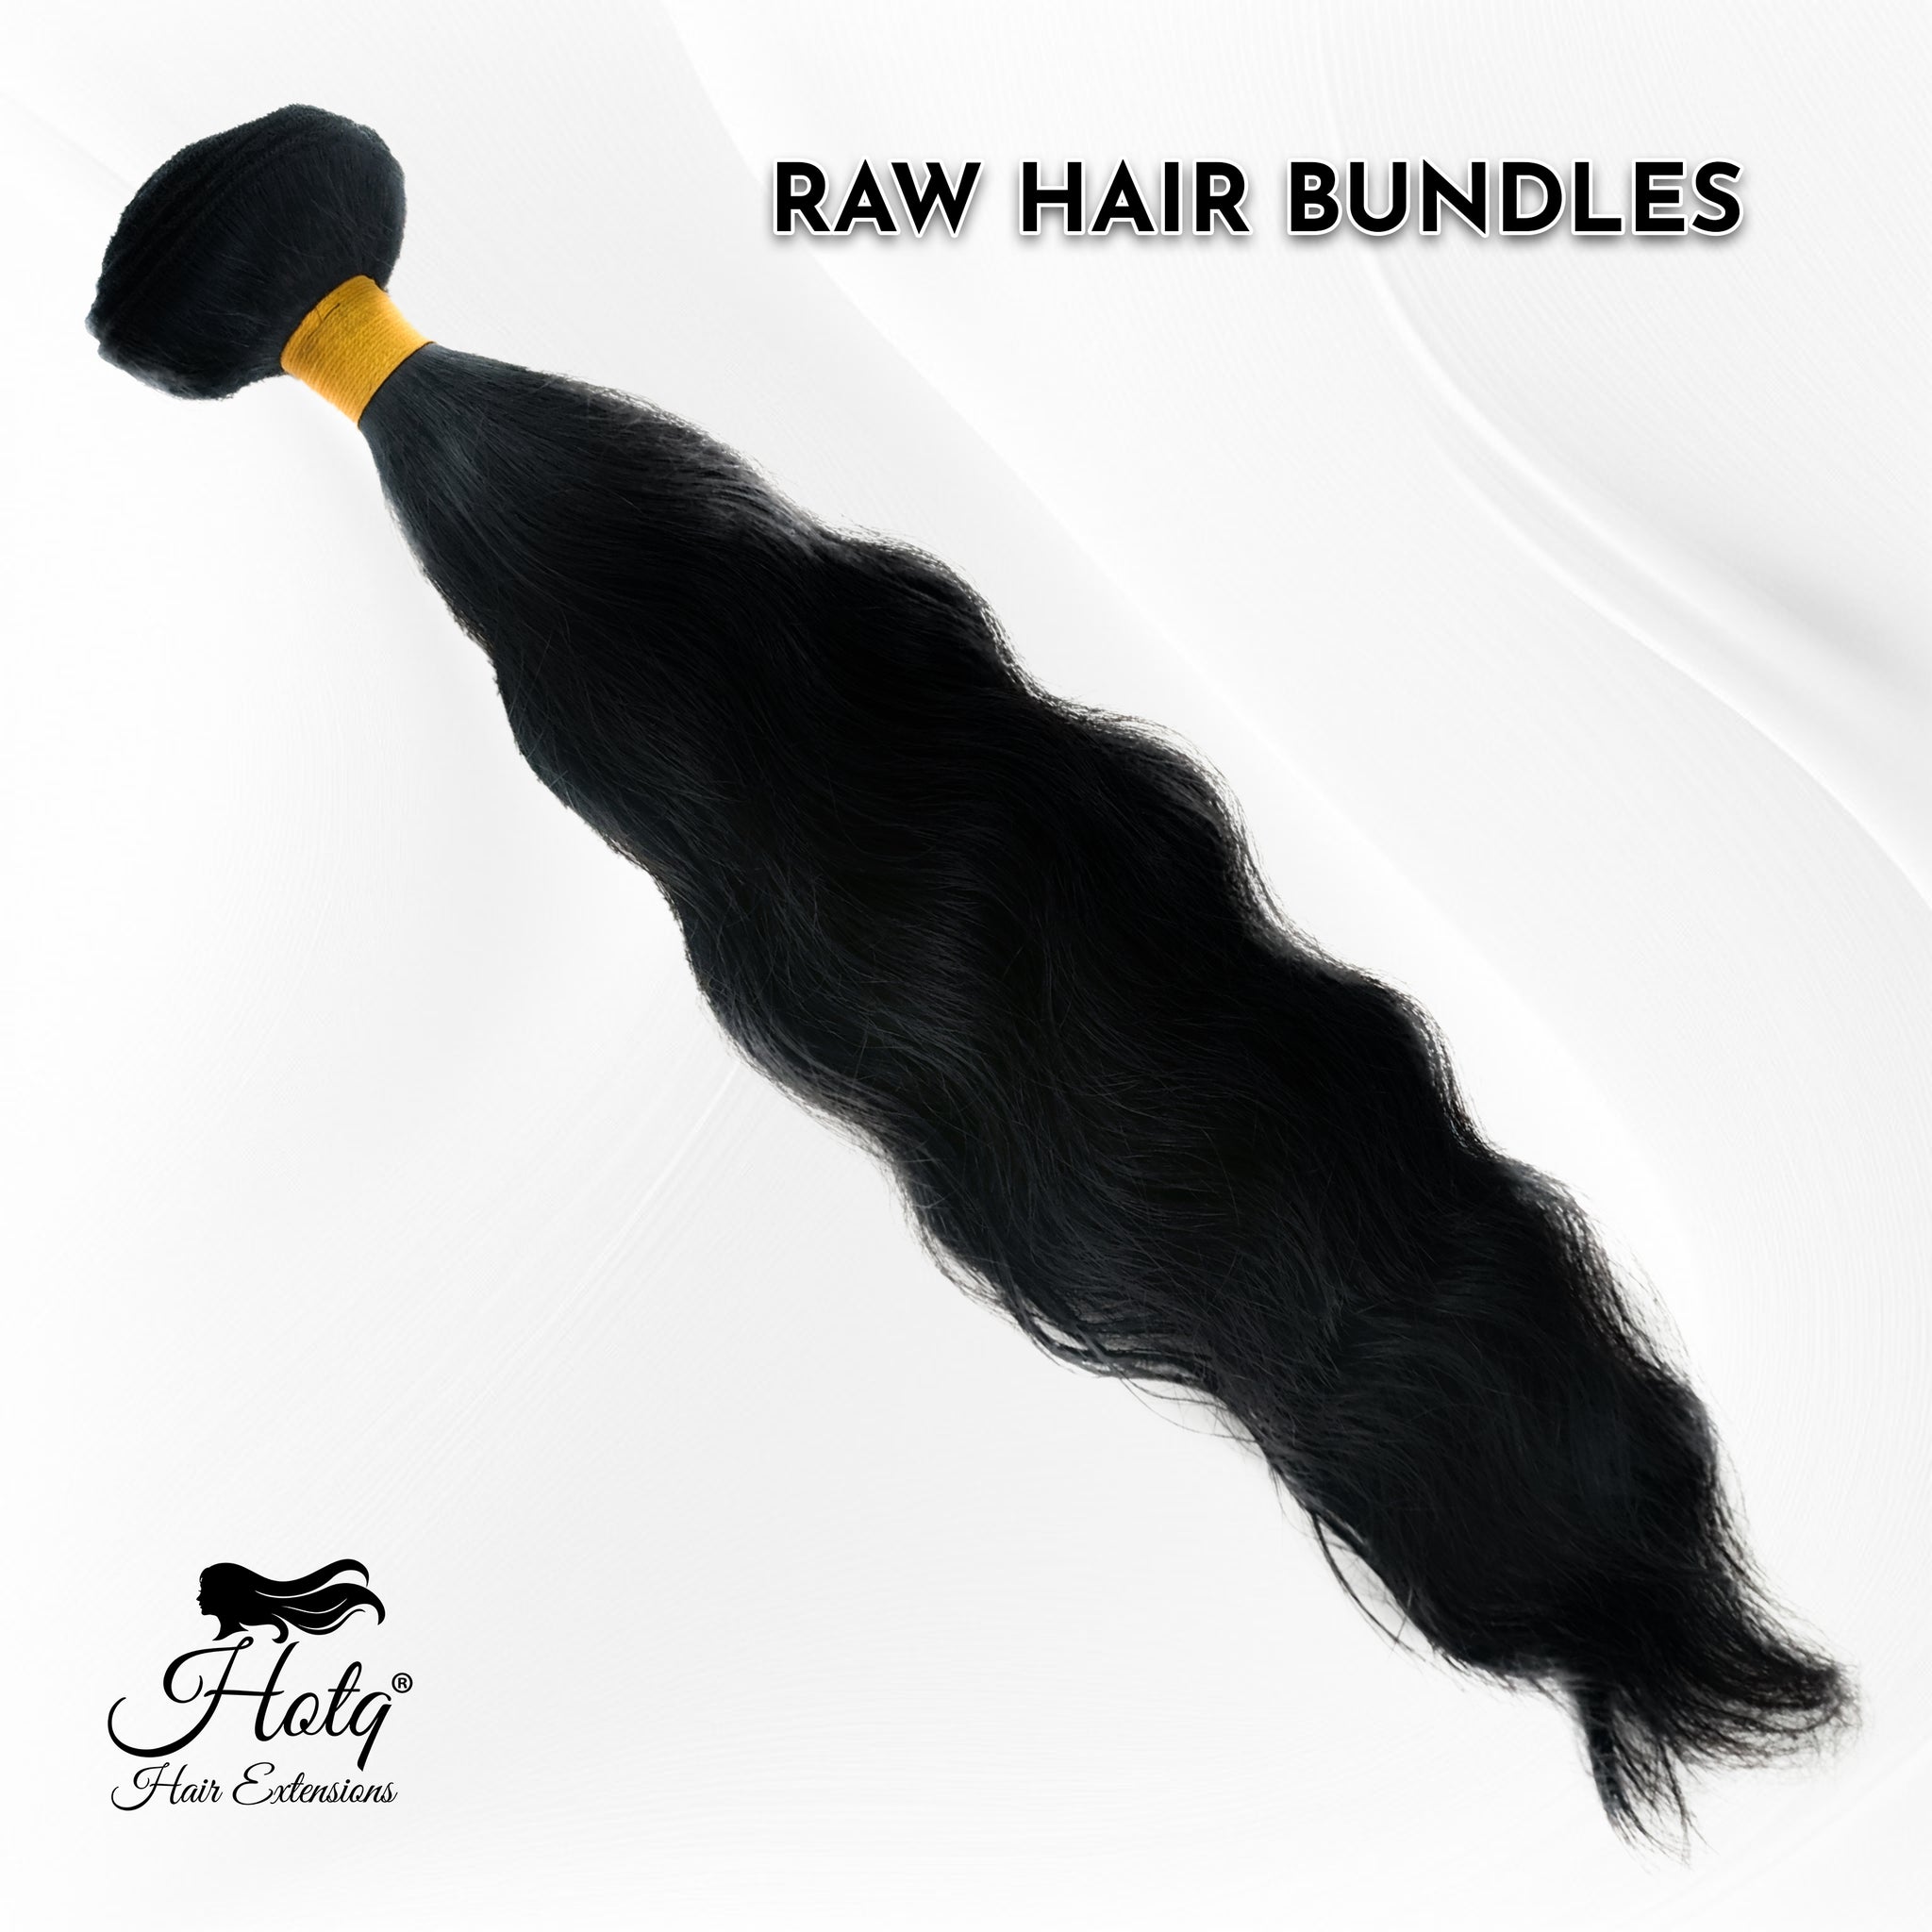 Weave Hair Bundles: A Comprehensive Guide